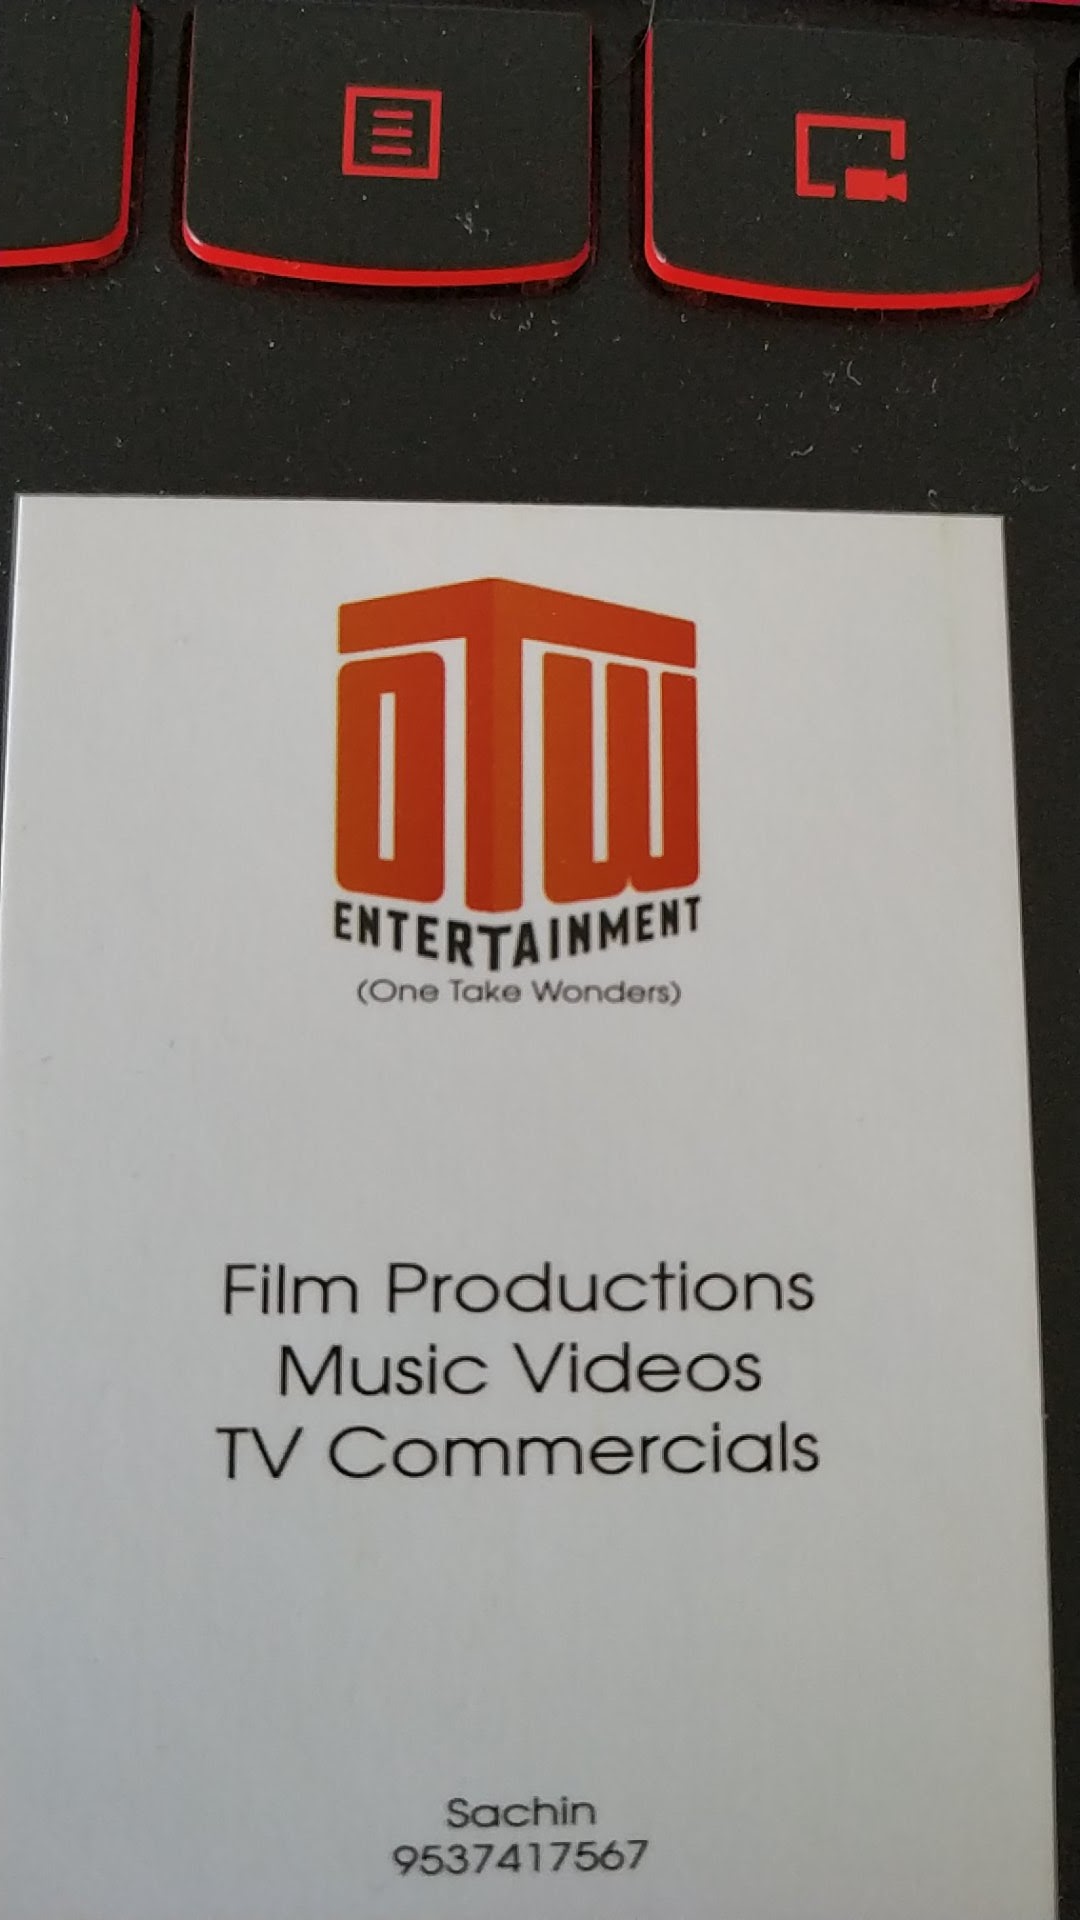 OTW Motion Pictures